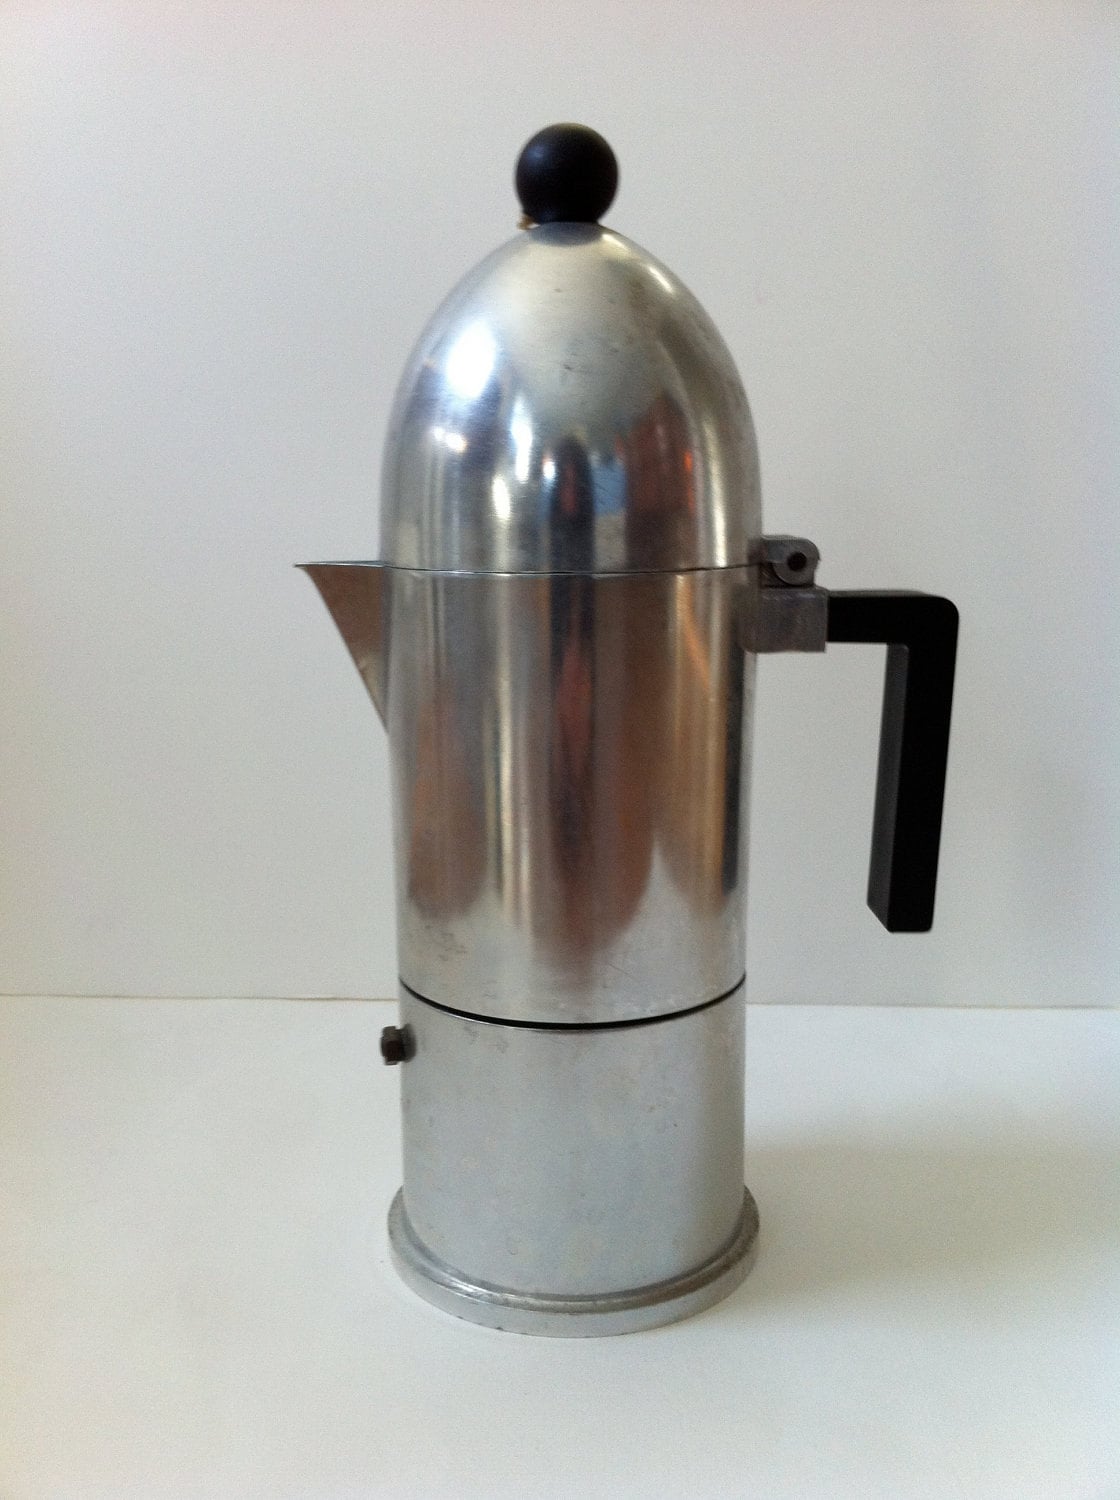 Vintage La Cupola Espresso Maker by Aldo Rossi for Alessi